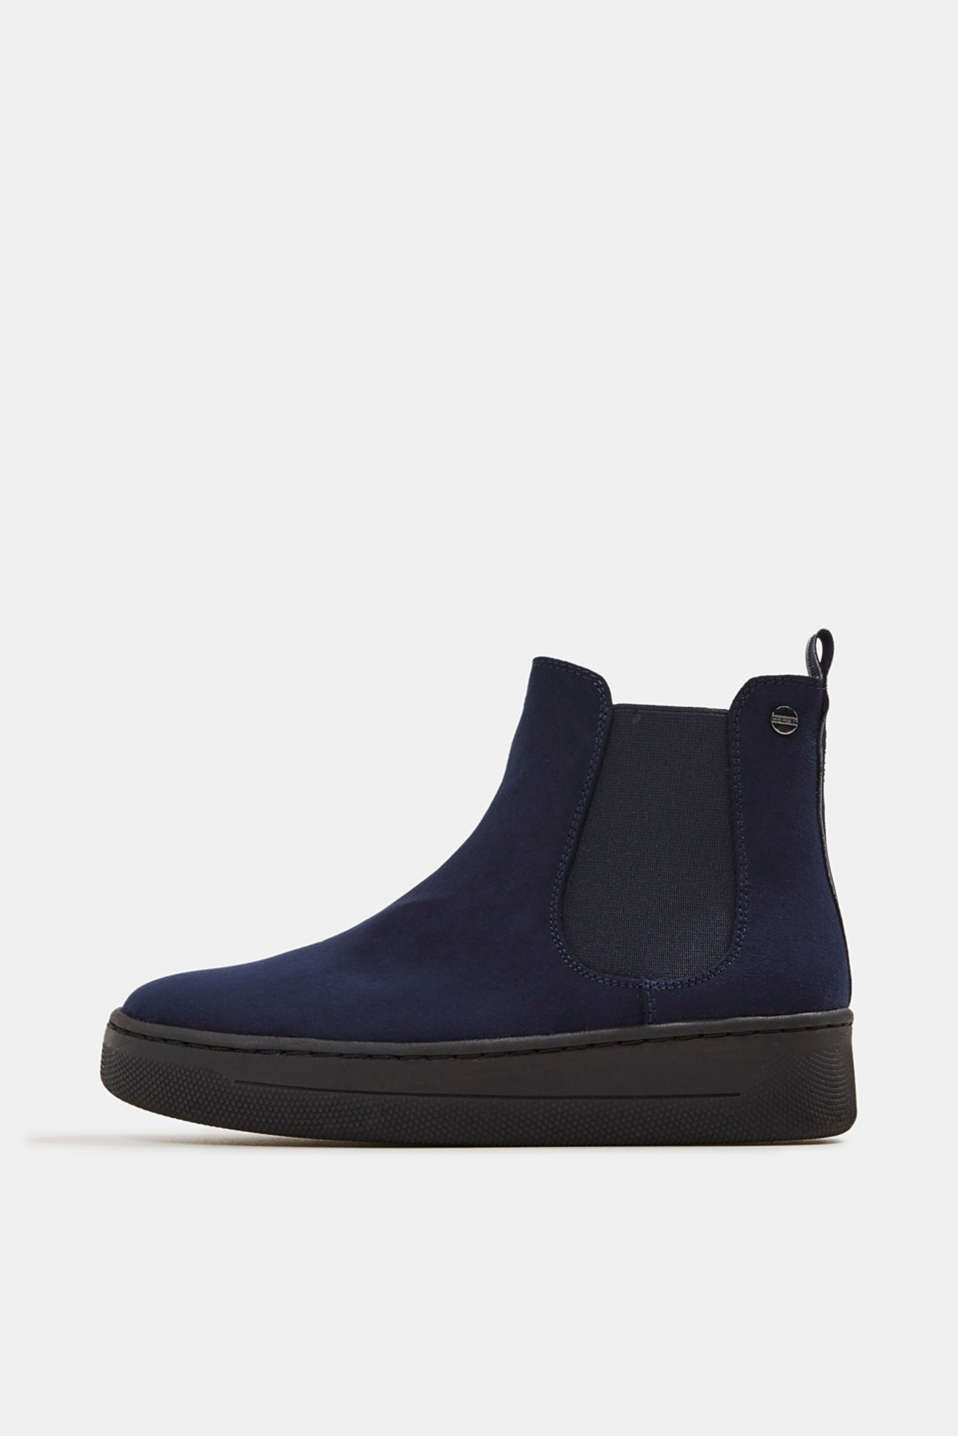 Esprit - Chelsea boots in faux suede at our Online Shop